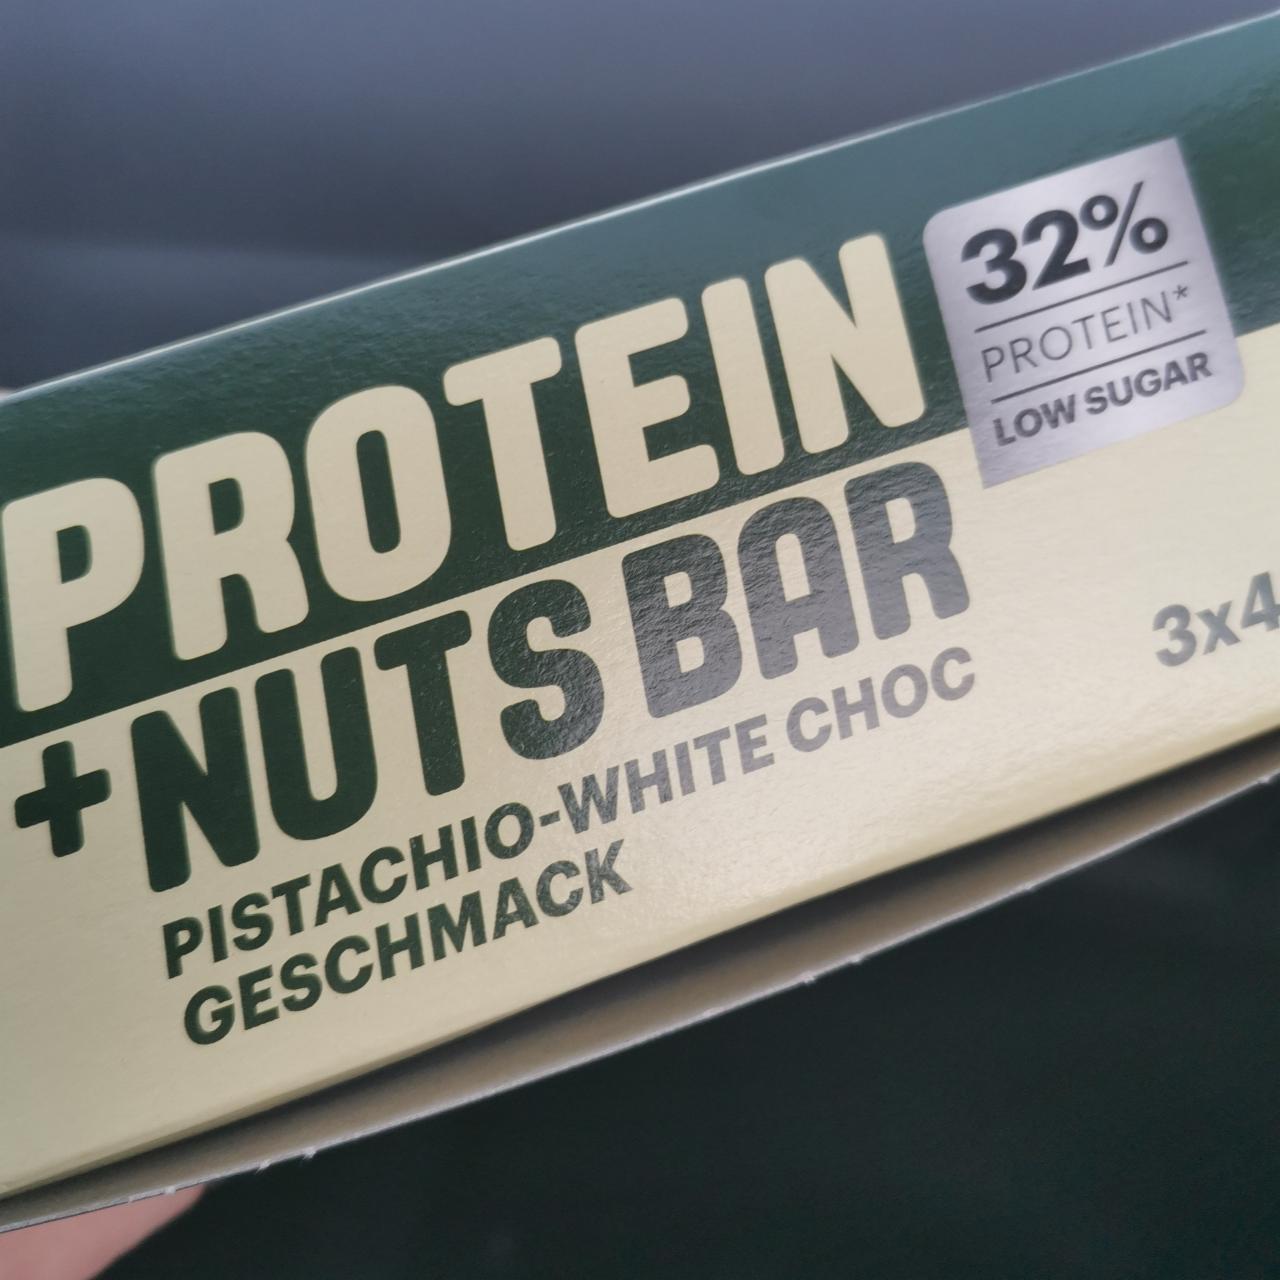 Фото - Protein+nuts bar Pistachio-white choc geschmack